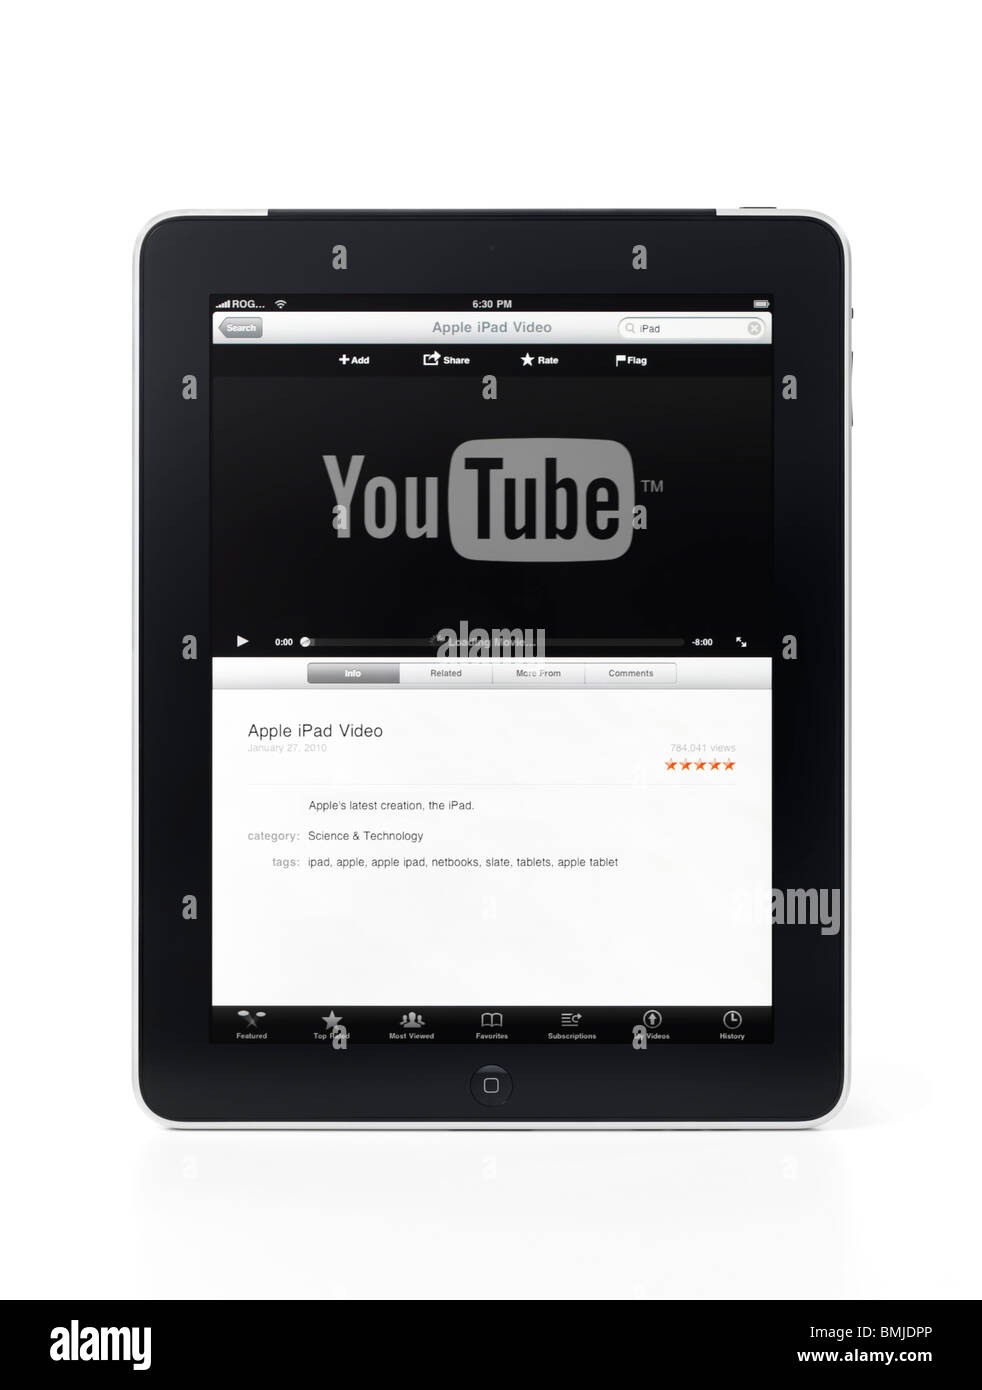 Apple iPad 3G tablet computer with You Tube sur son affichage isolé sur fond blanc avec clipping path Banque D'Images